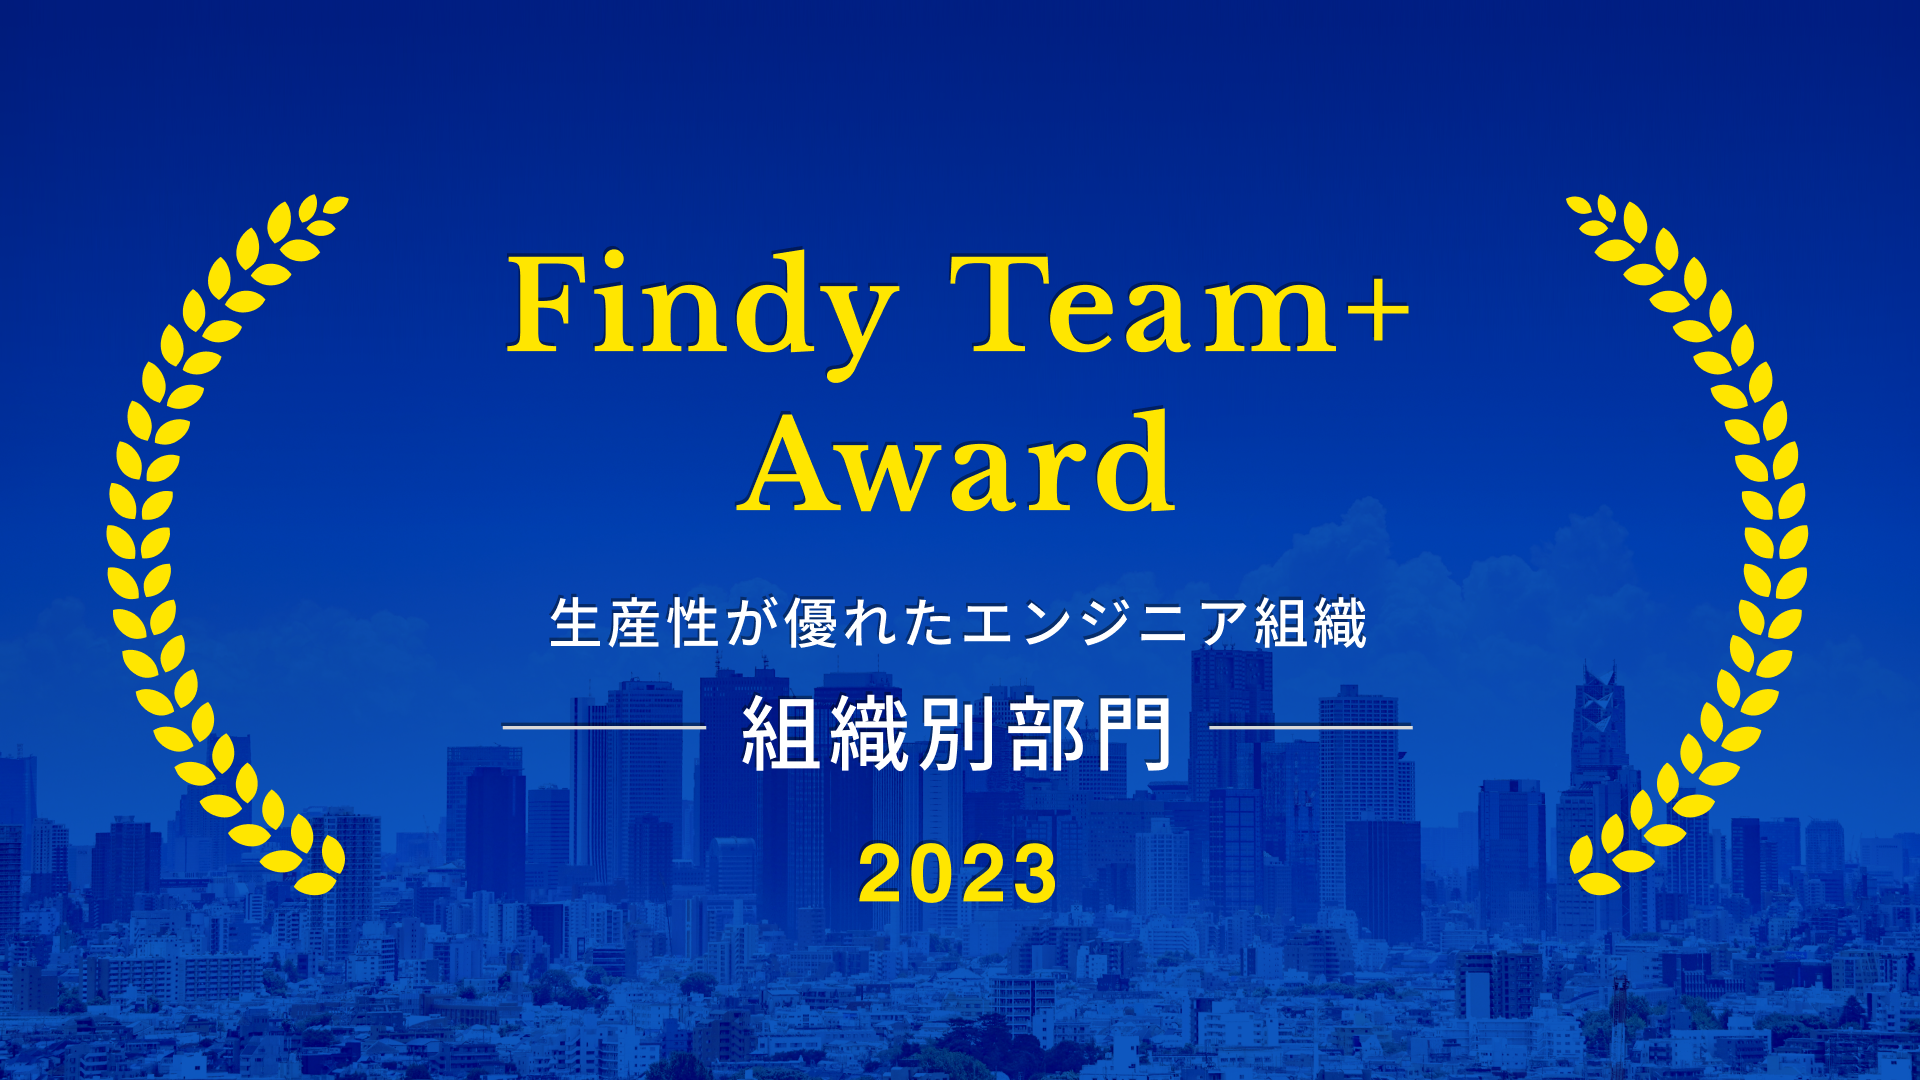 oCZAFindy Team+ Award 2023 ܁@GWjAgD̊JYDꂽƂƂđIo܂